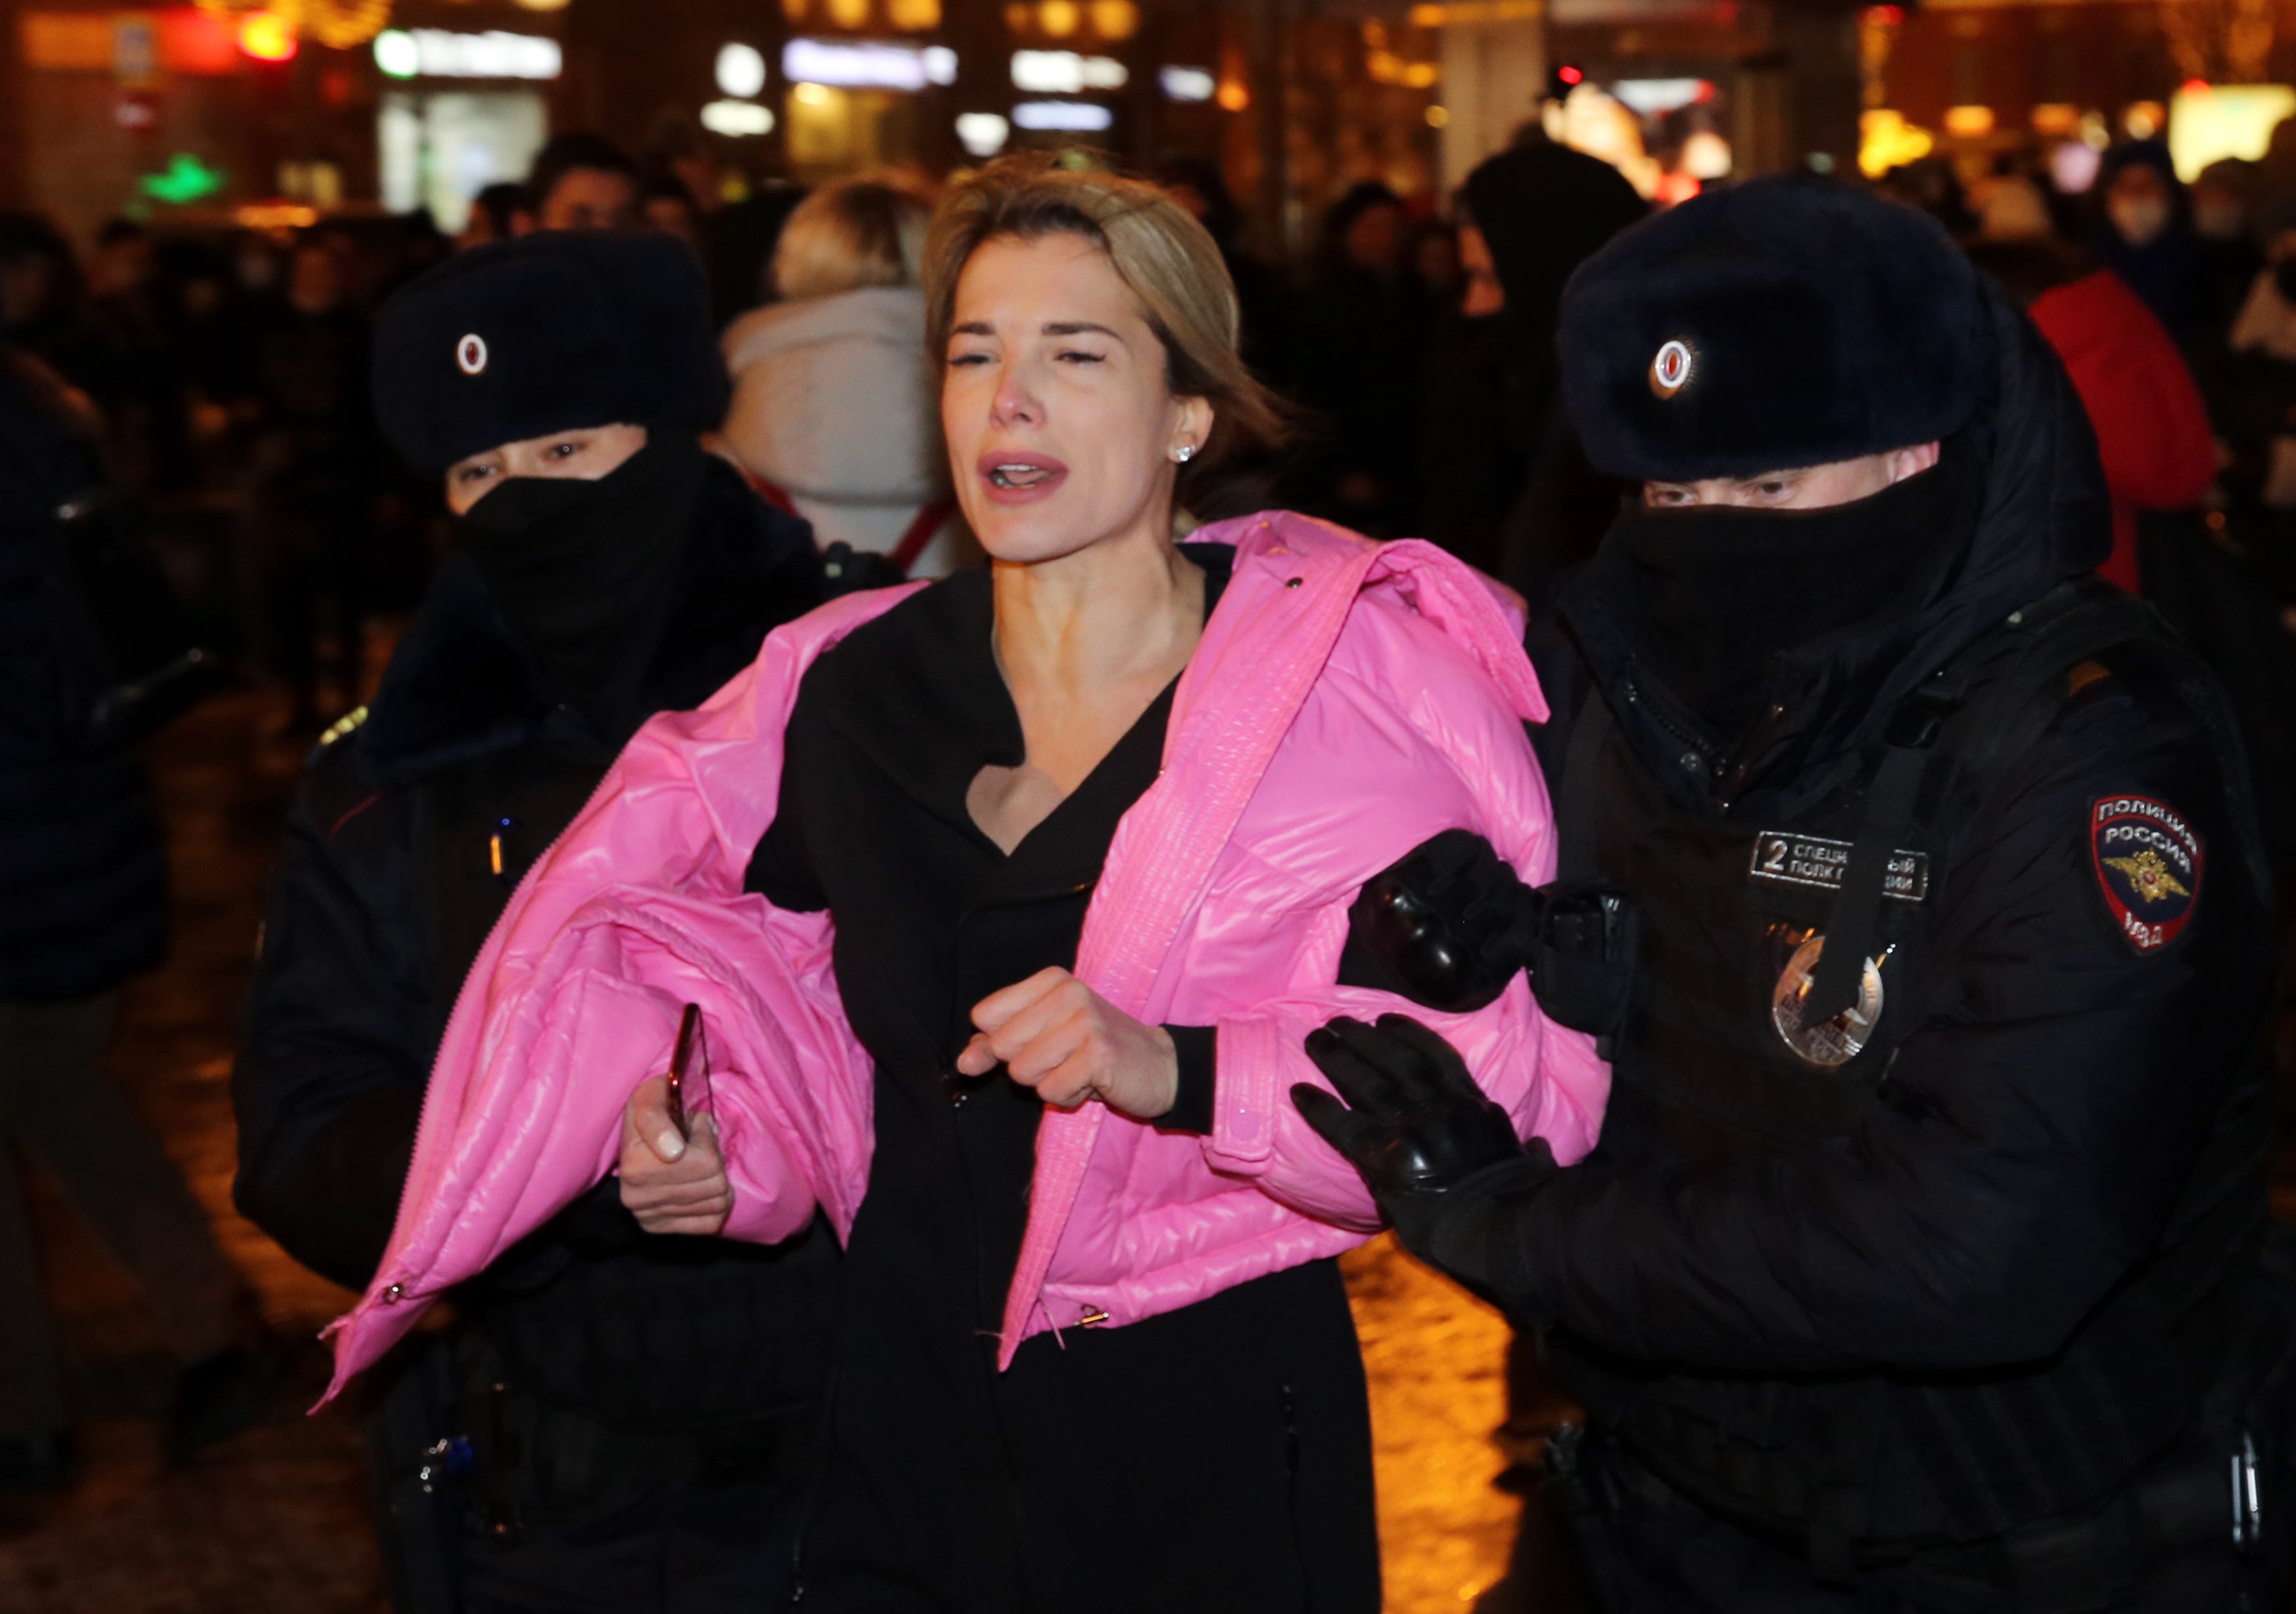 Russian police officers hold Ukrainian pop singer Olga Romanovskaya during a protest at Pushkinskaya Square